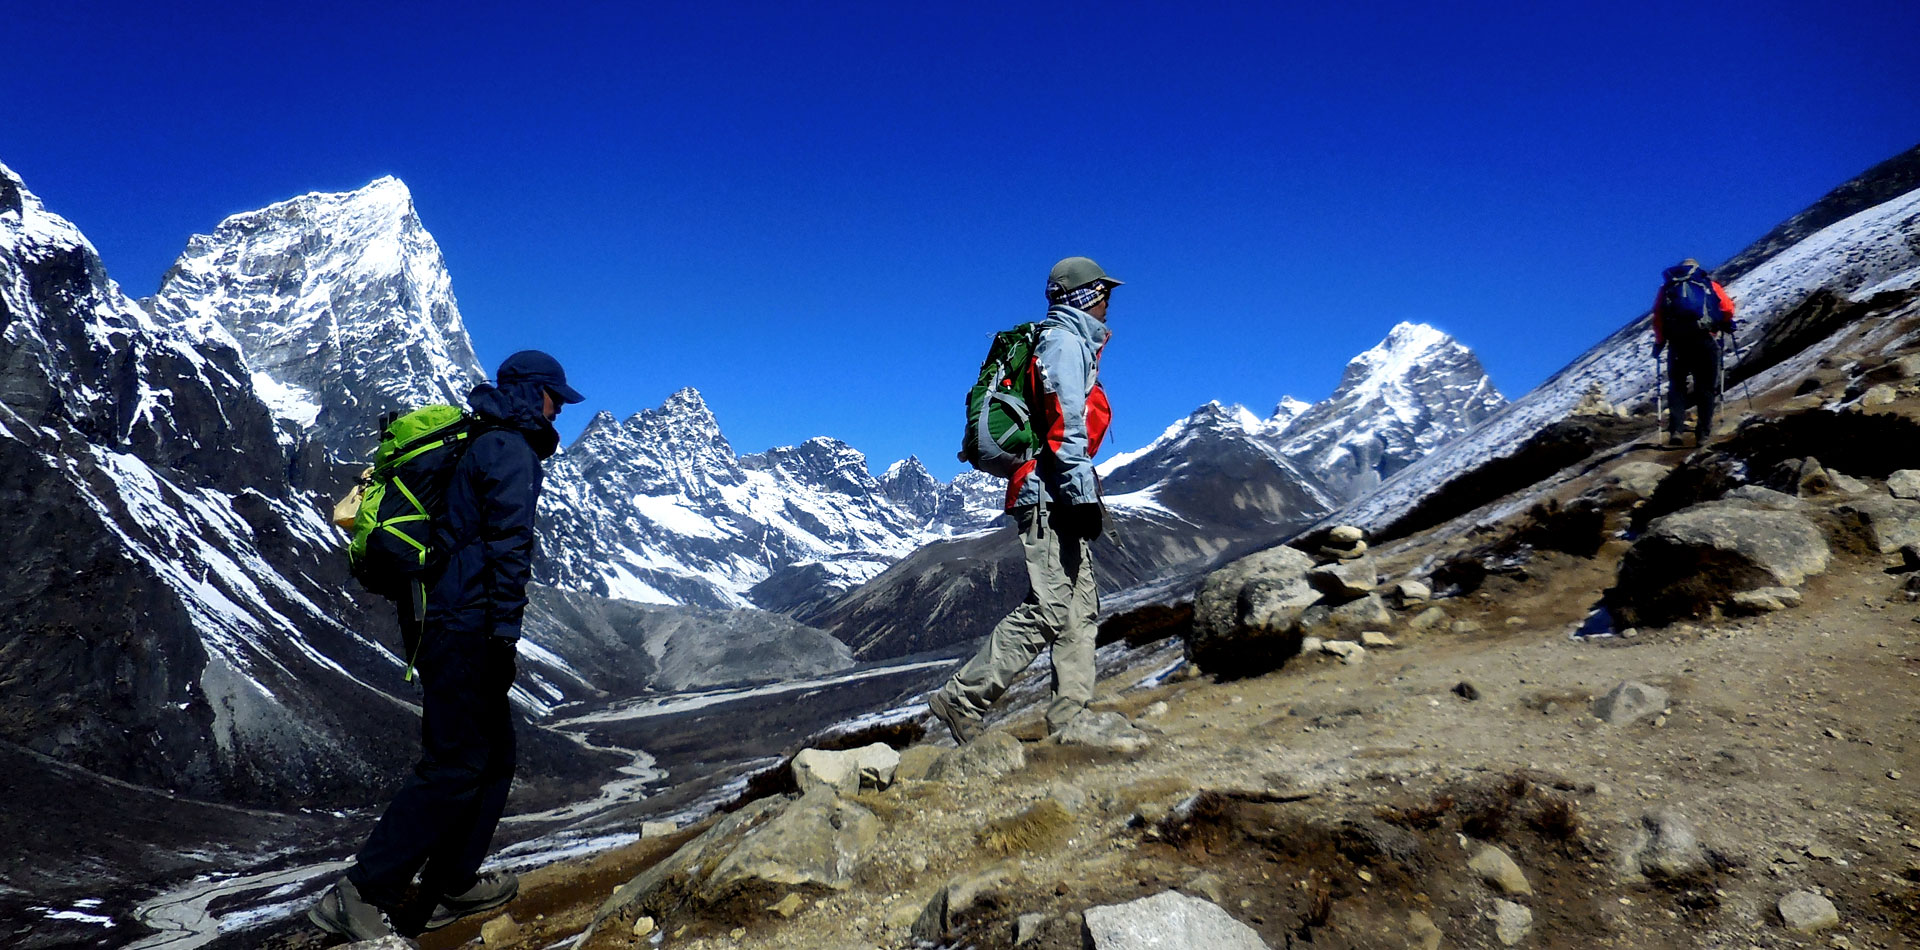 Trekking in Nepal - adventure and pleasure time in the Himalaya